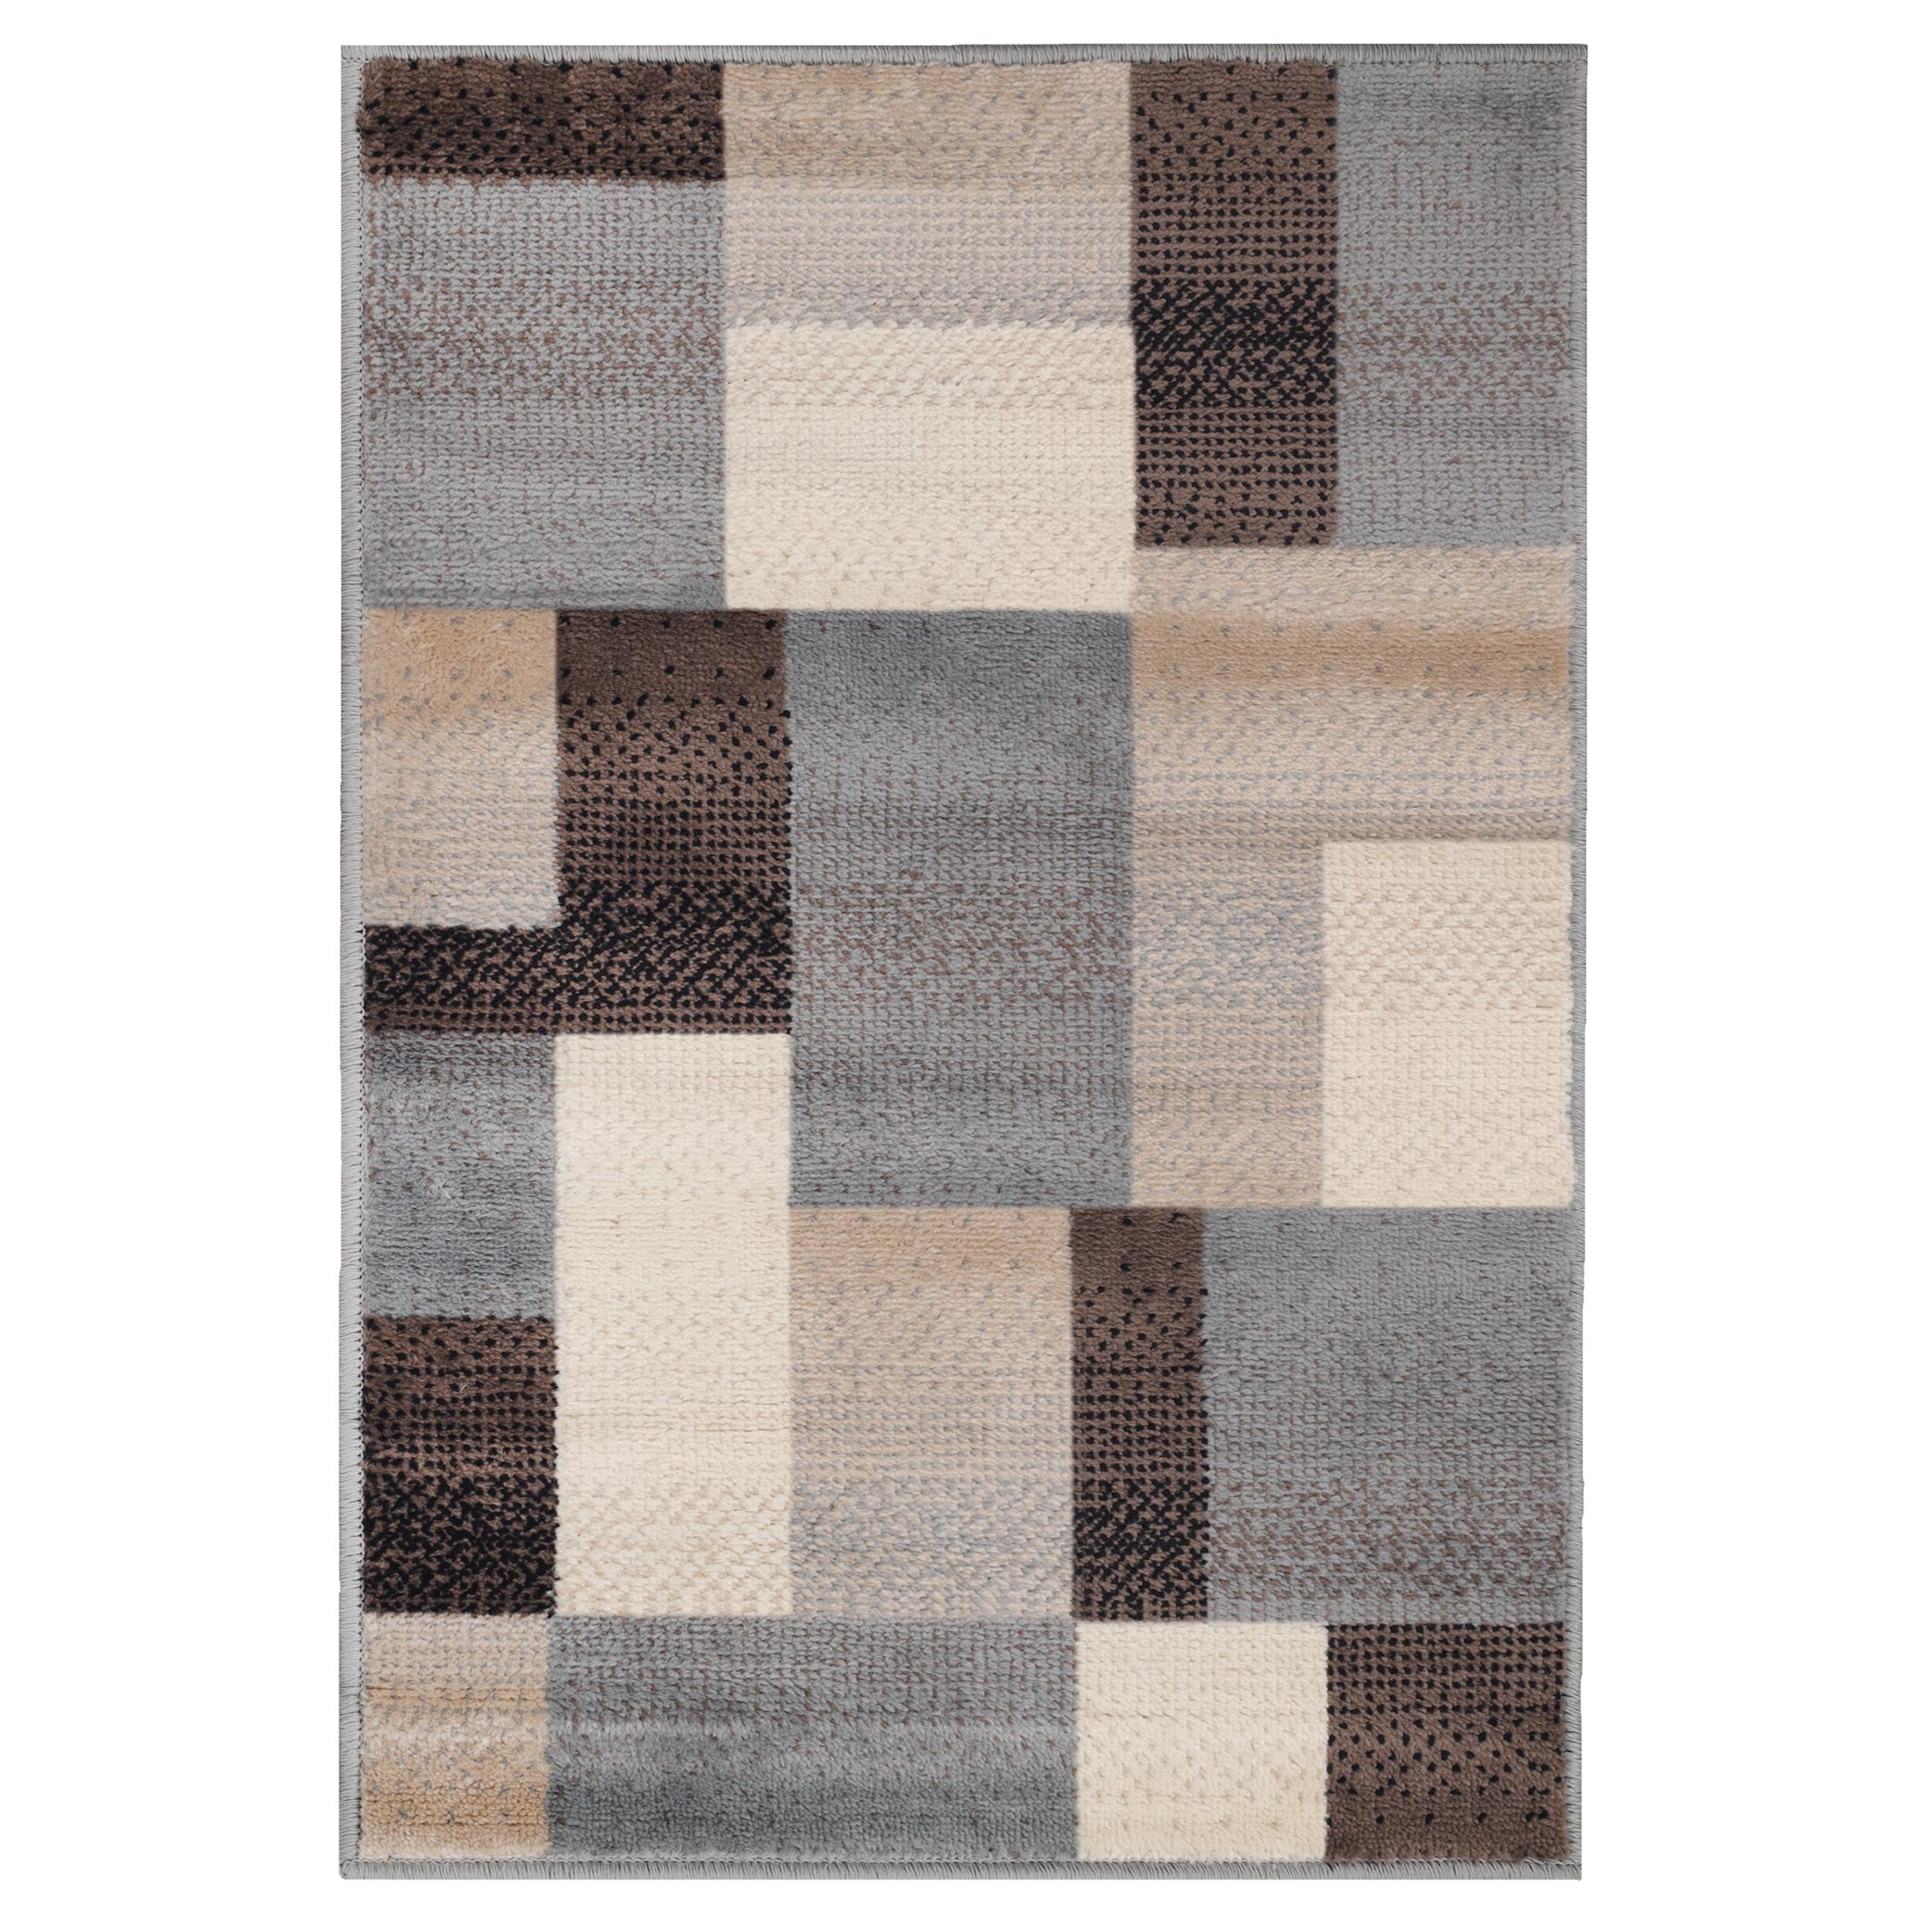 Brown Designer Rug Checked Pattern Modern Home Carpet Easy Care Room Floor Mat 